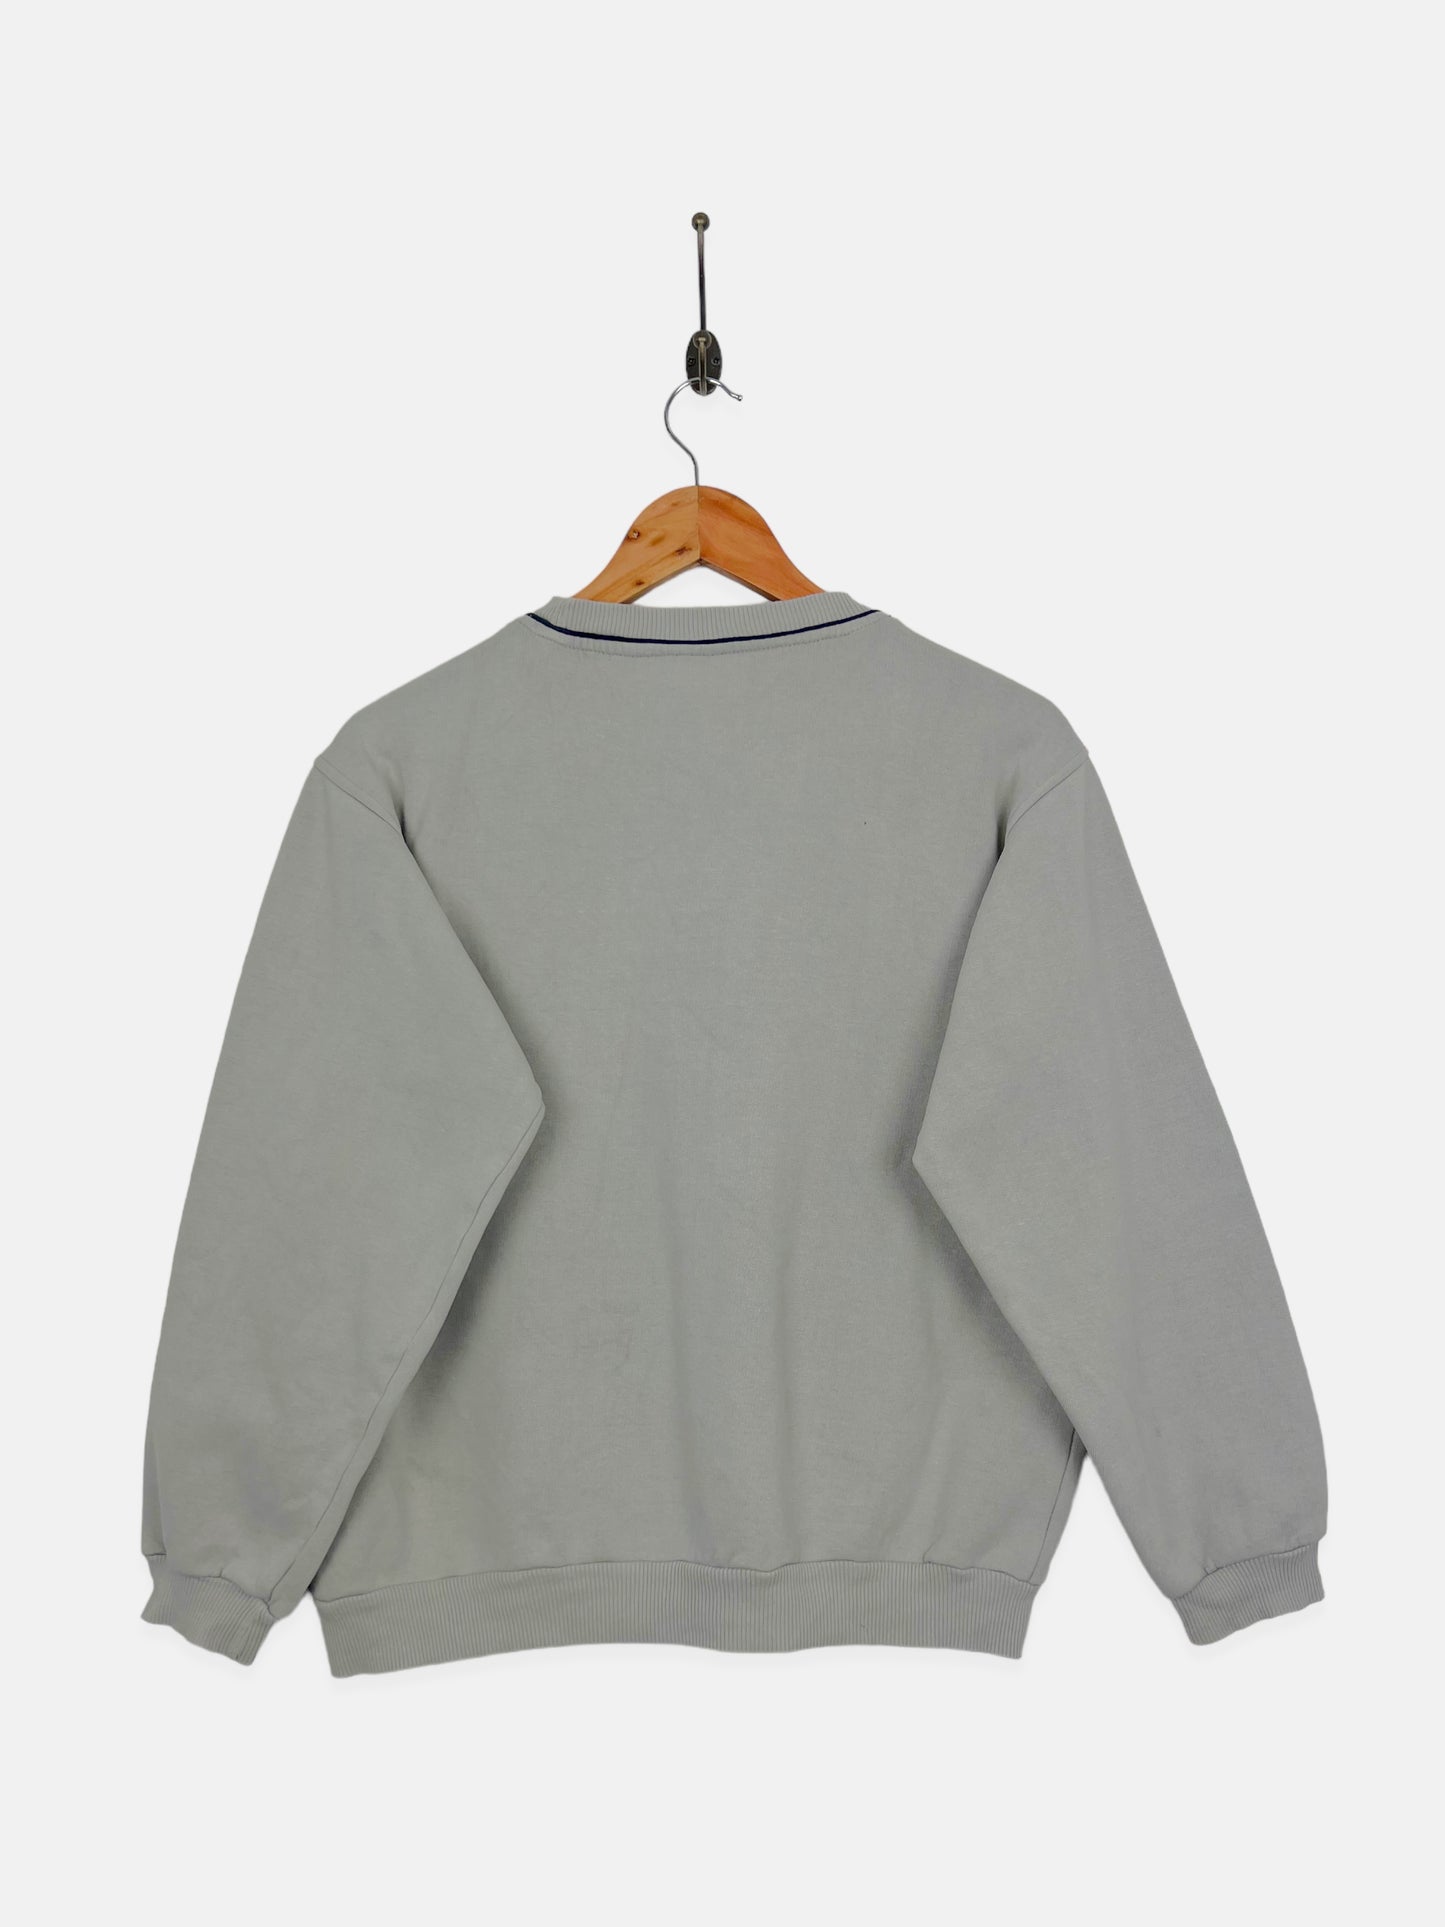 90's Fila Embroidered Vintage Sweatshirt Size 6-8